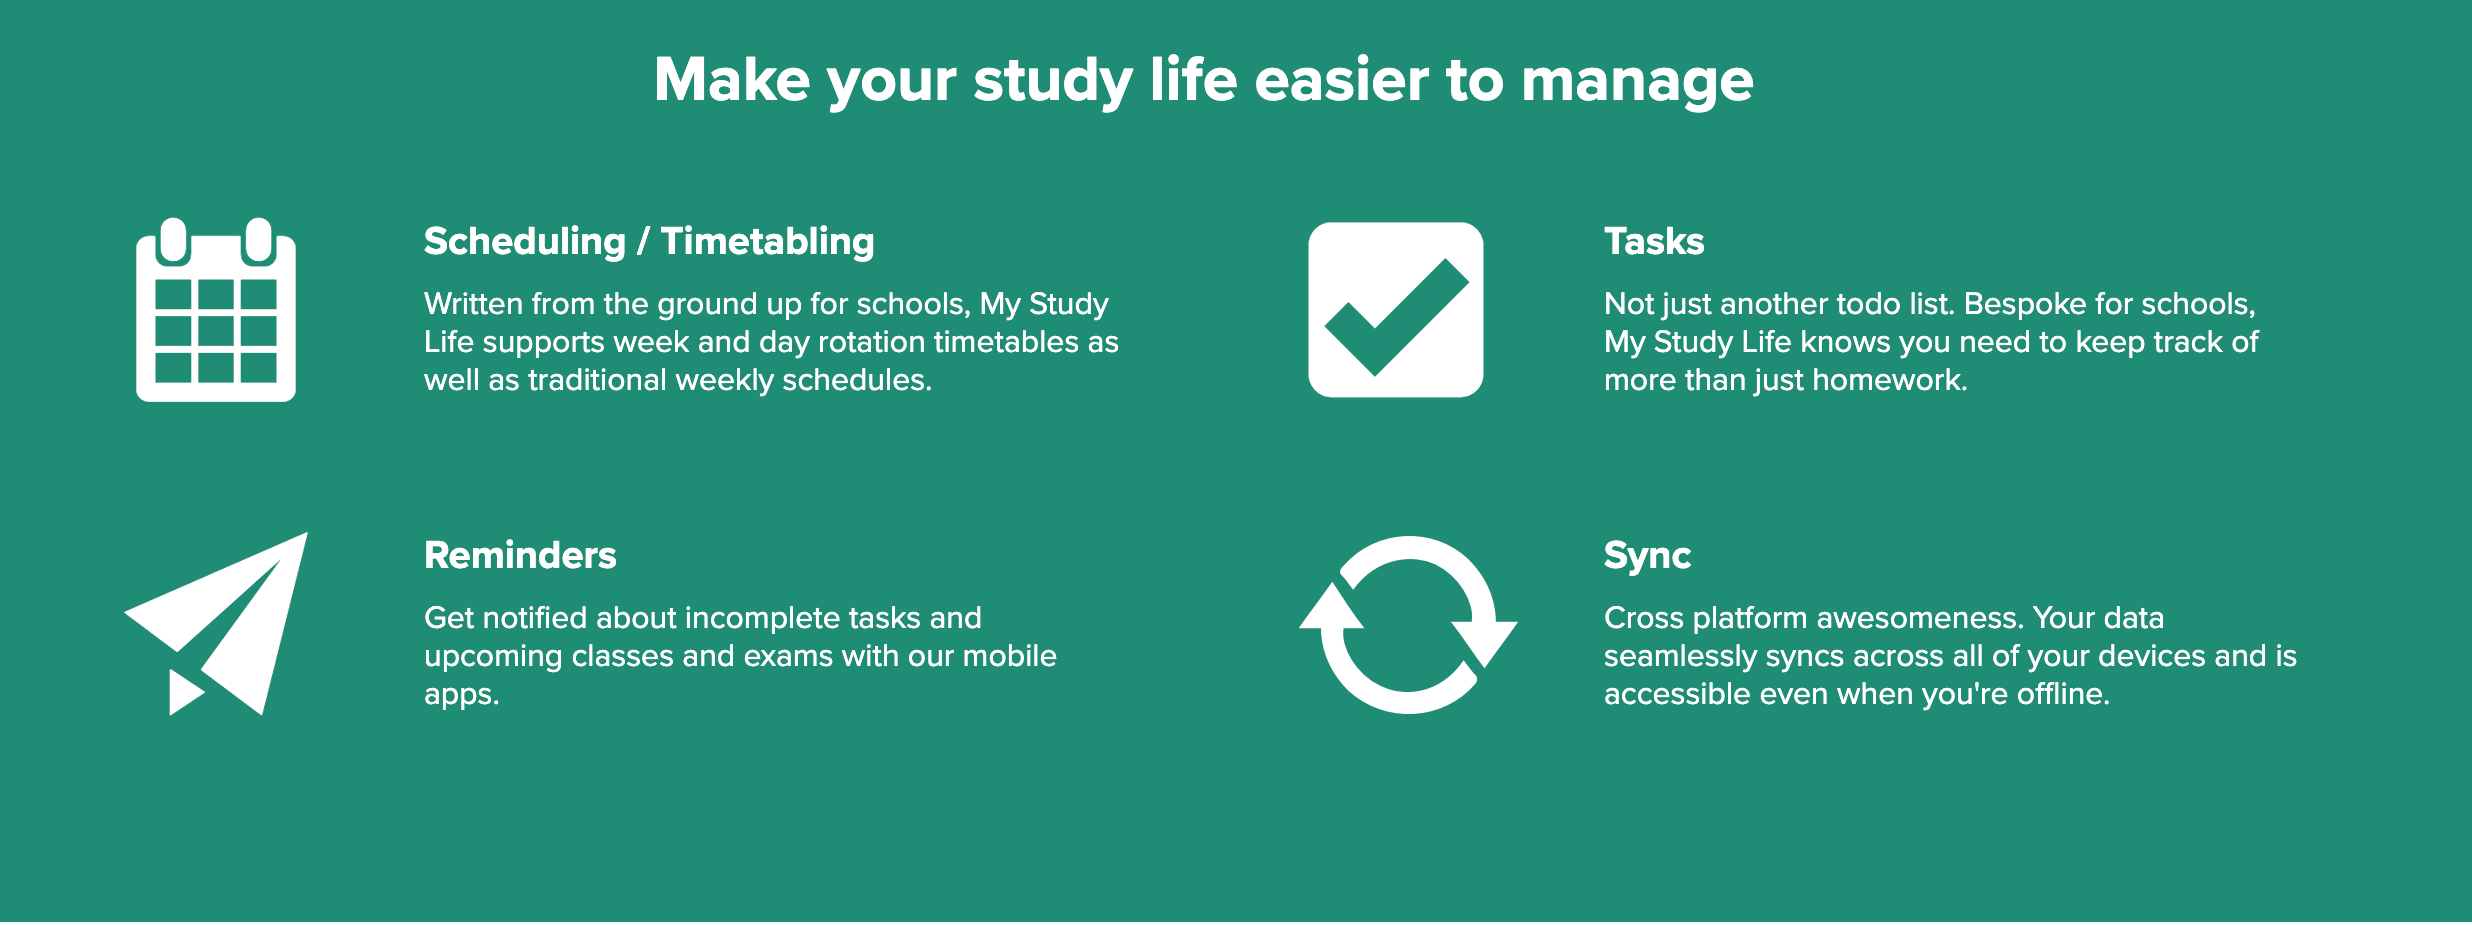 My Study Life app advertisement